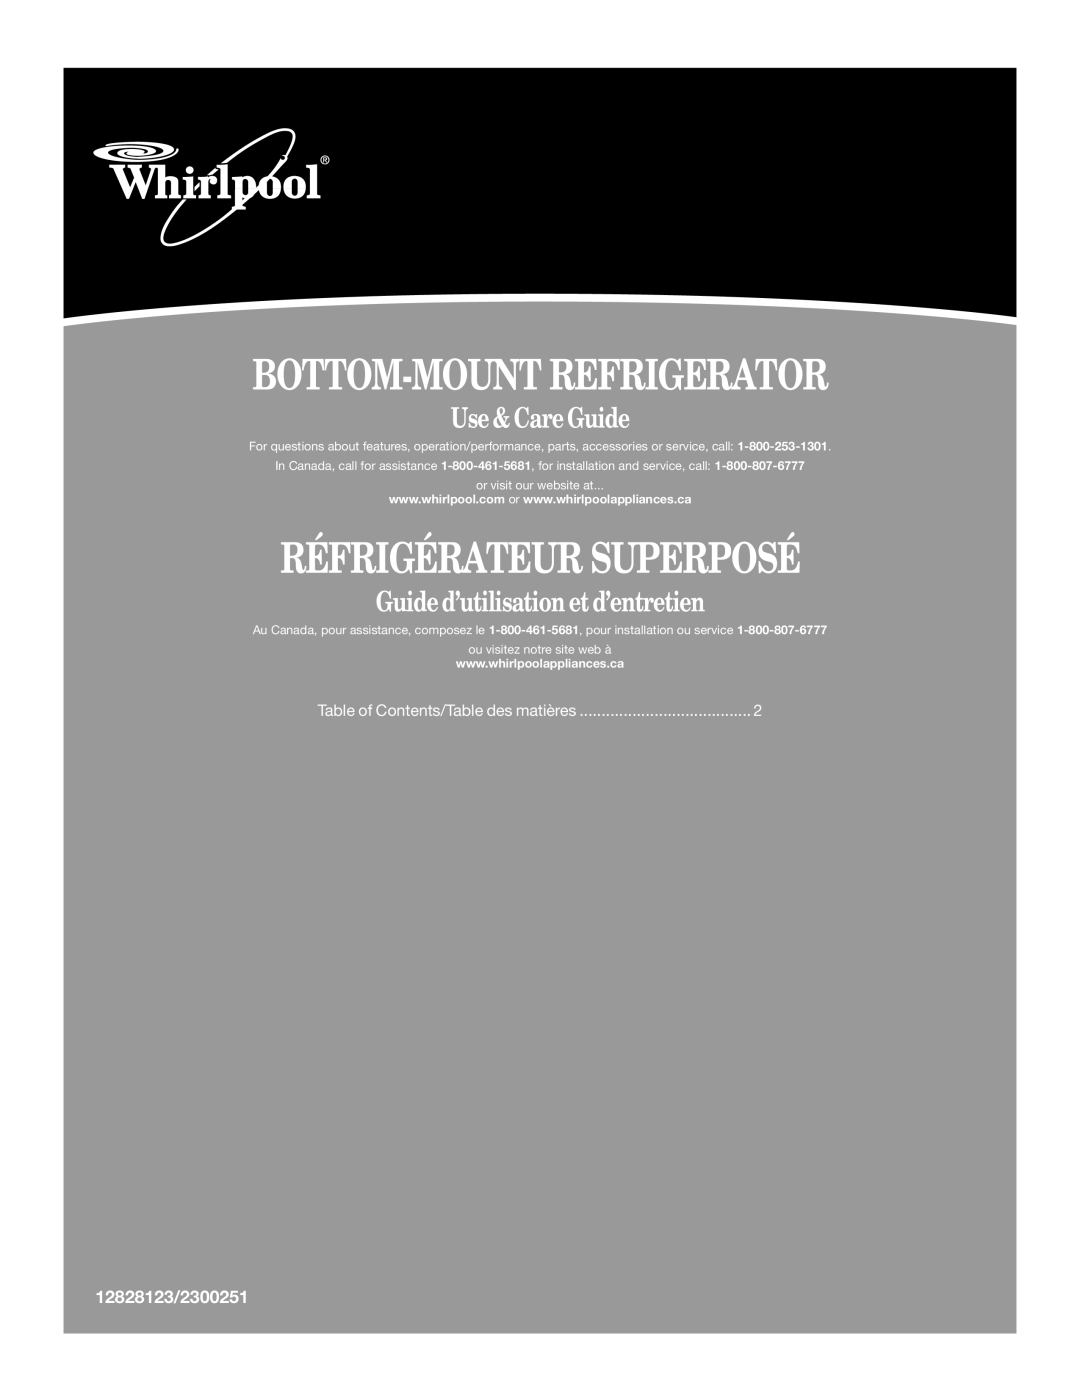 Whirlpool GB2SHDXPB00 manual Bottom-Mount Refrigerator, Réfrigérateur Superposé, Use & Care Guide, 12828123/2300251 